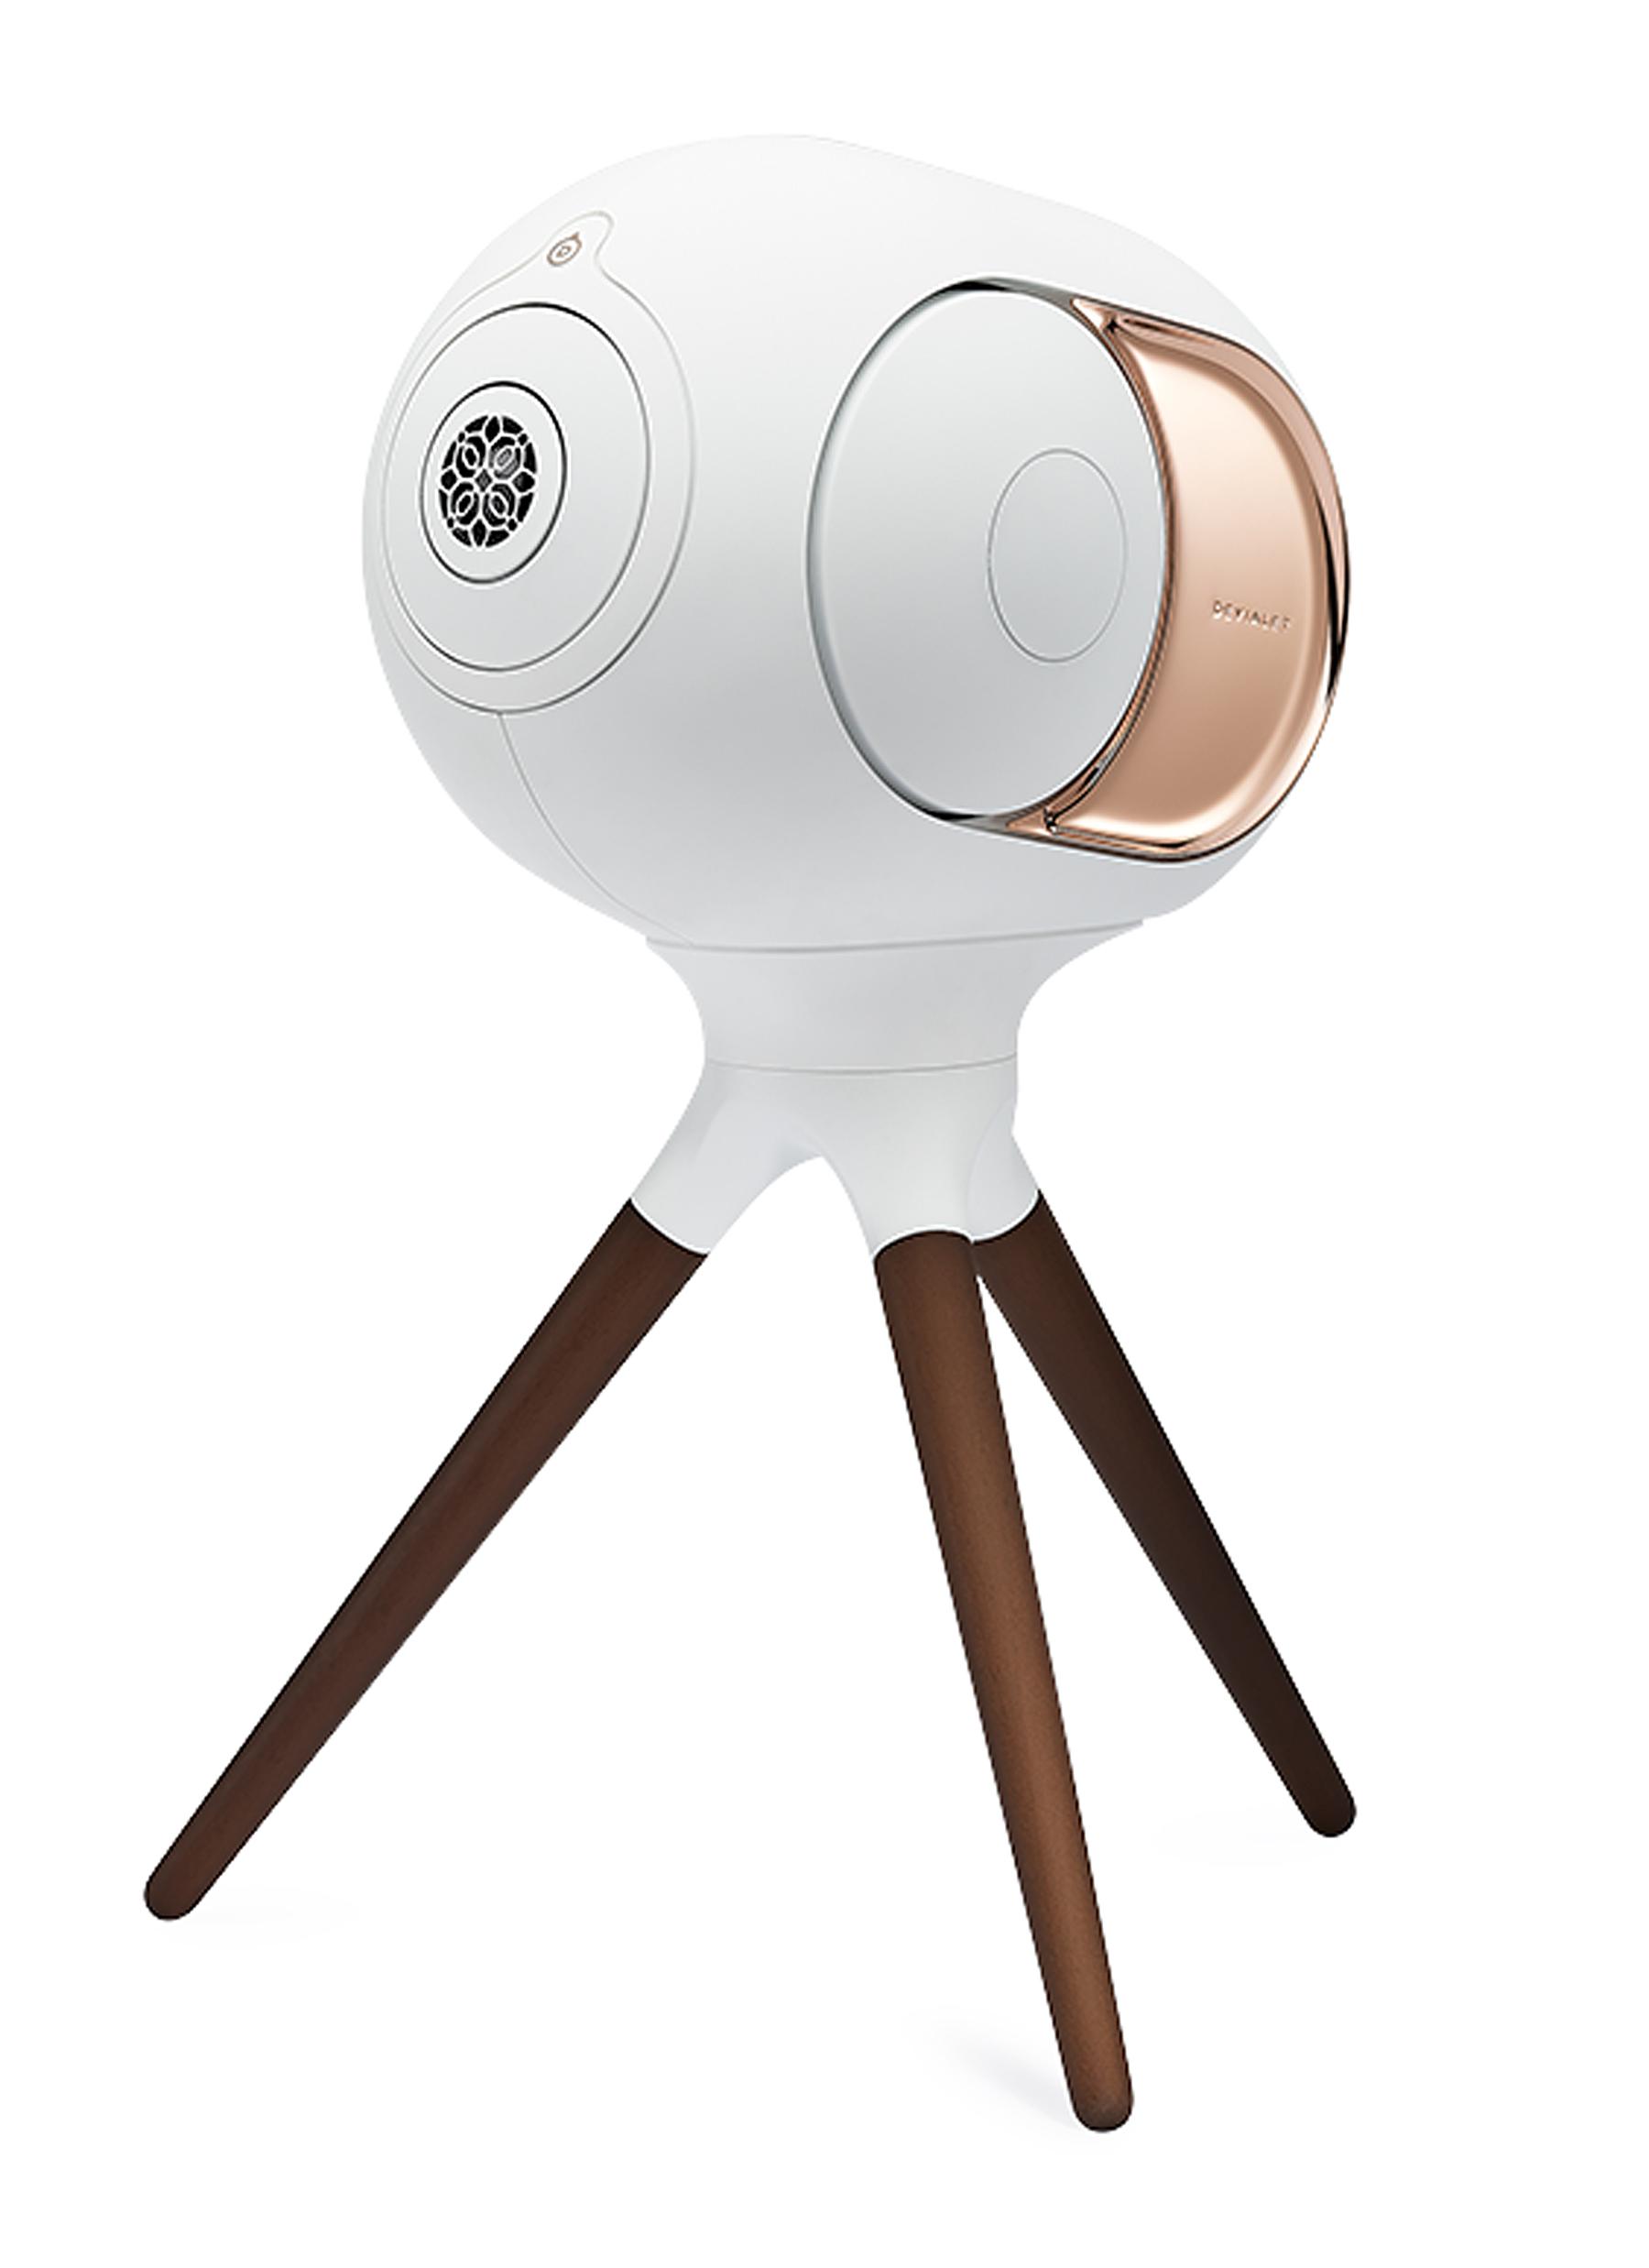 DEVIALET Treepod Wireless Speaker Stand - Iconic White